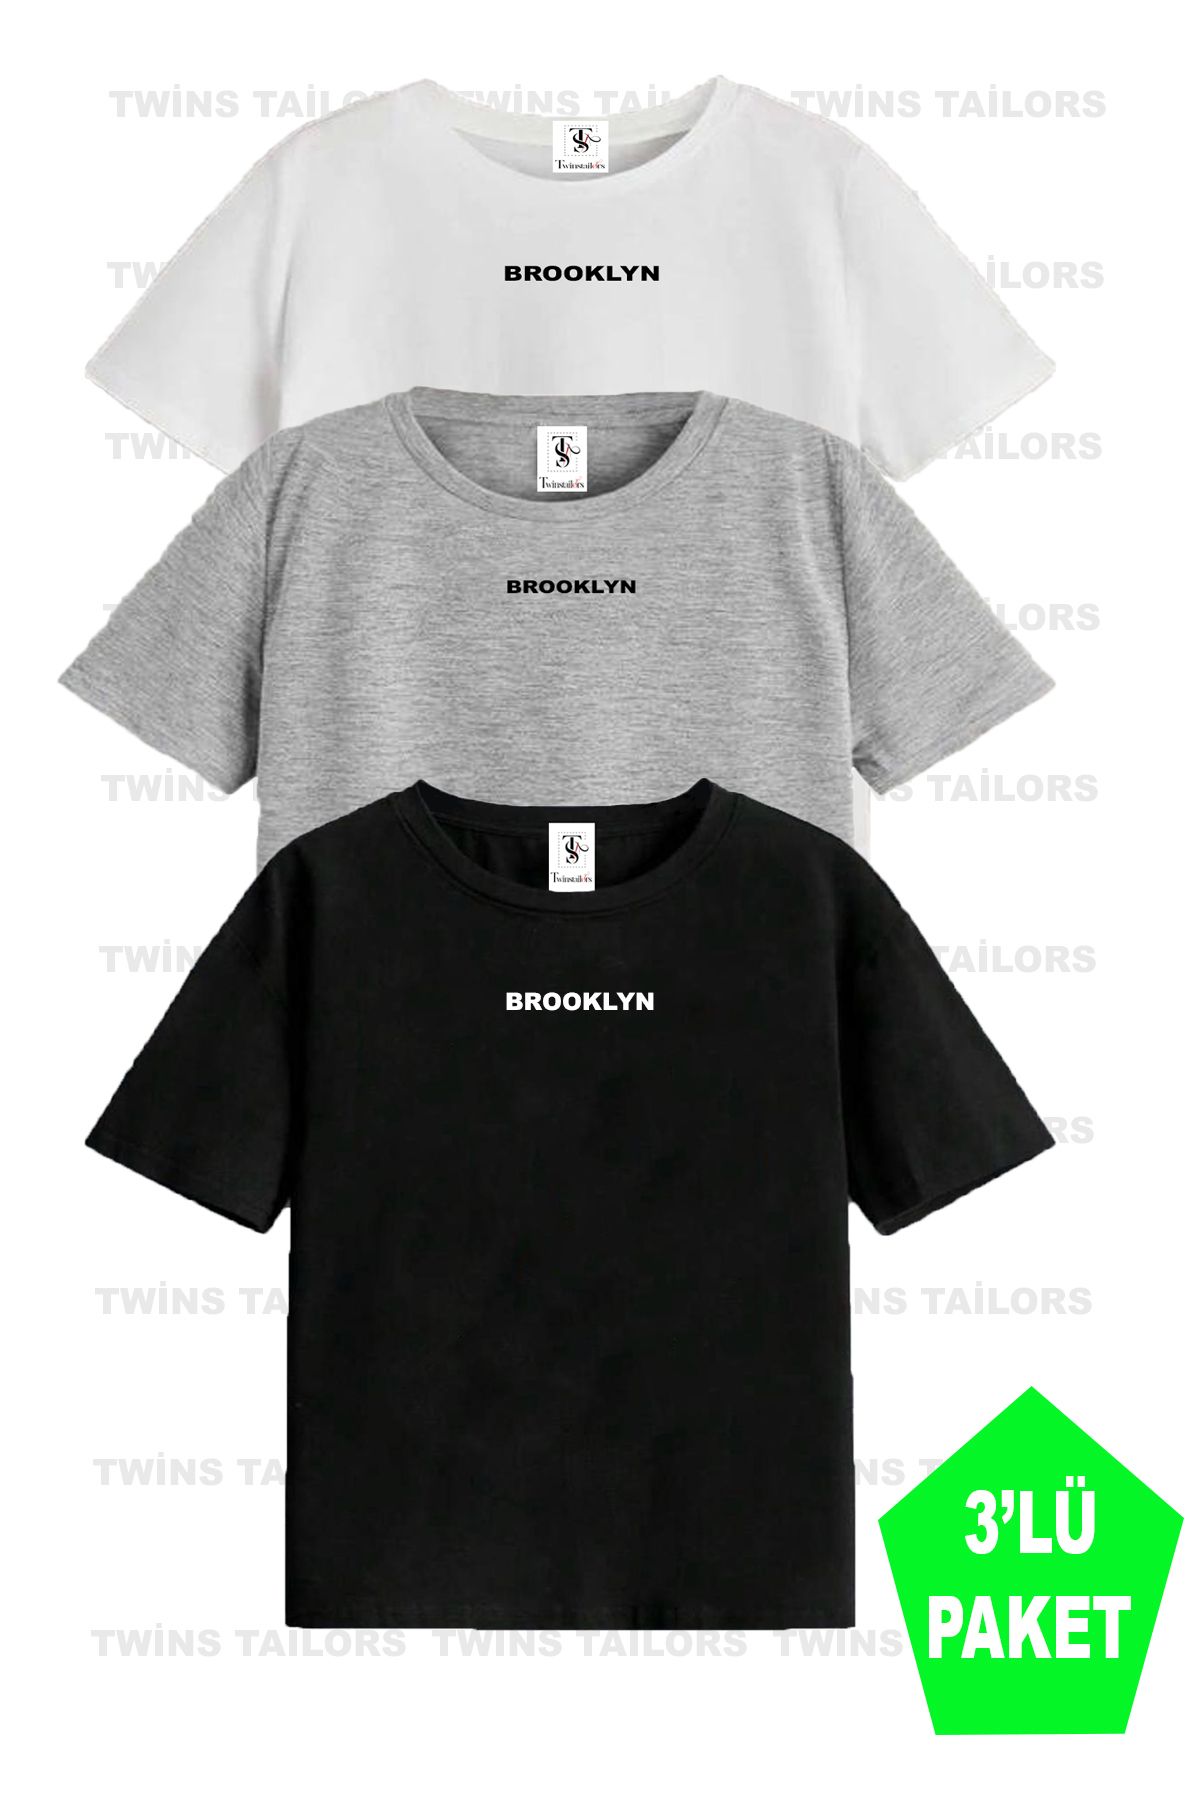 twins tailors Brooklyn Baskılı 3'lü Paket Unisex Siyah-Beyaz-Gri Çocuk Tişört/T-Shirt